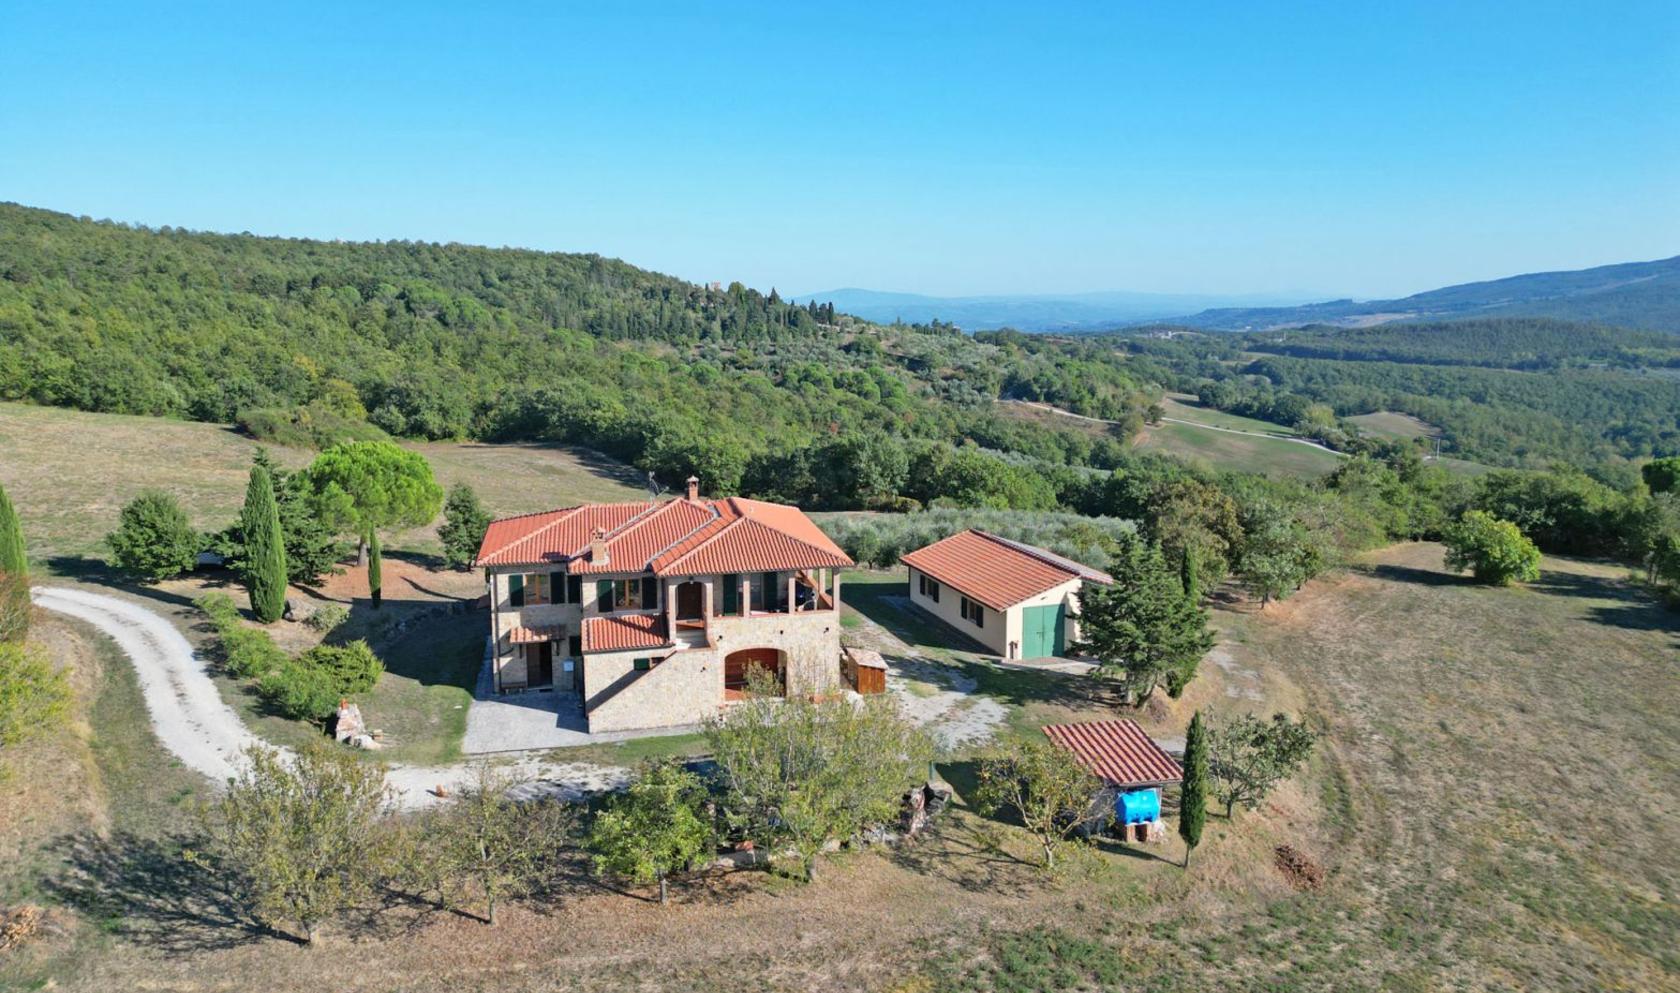 Toscana Immobiliare - Farm for sale in Montepulciano Siena Tuscany